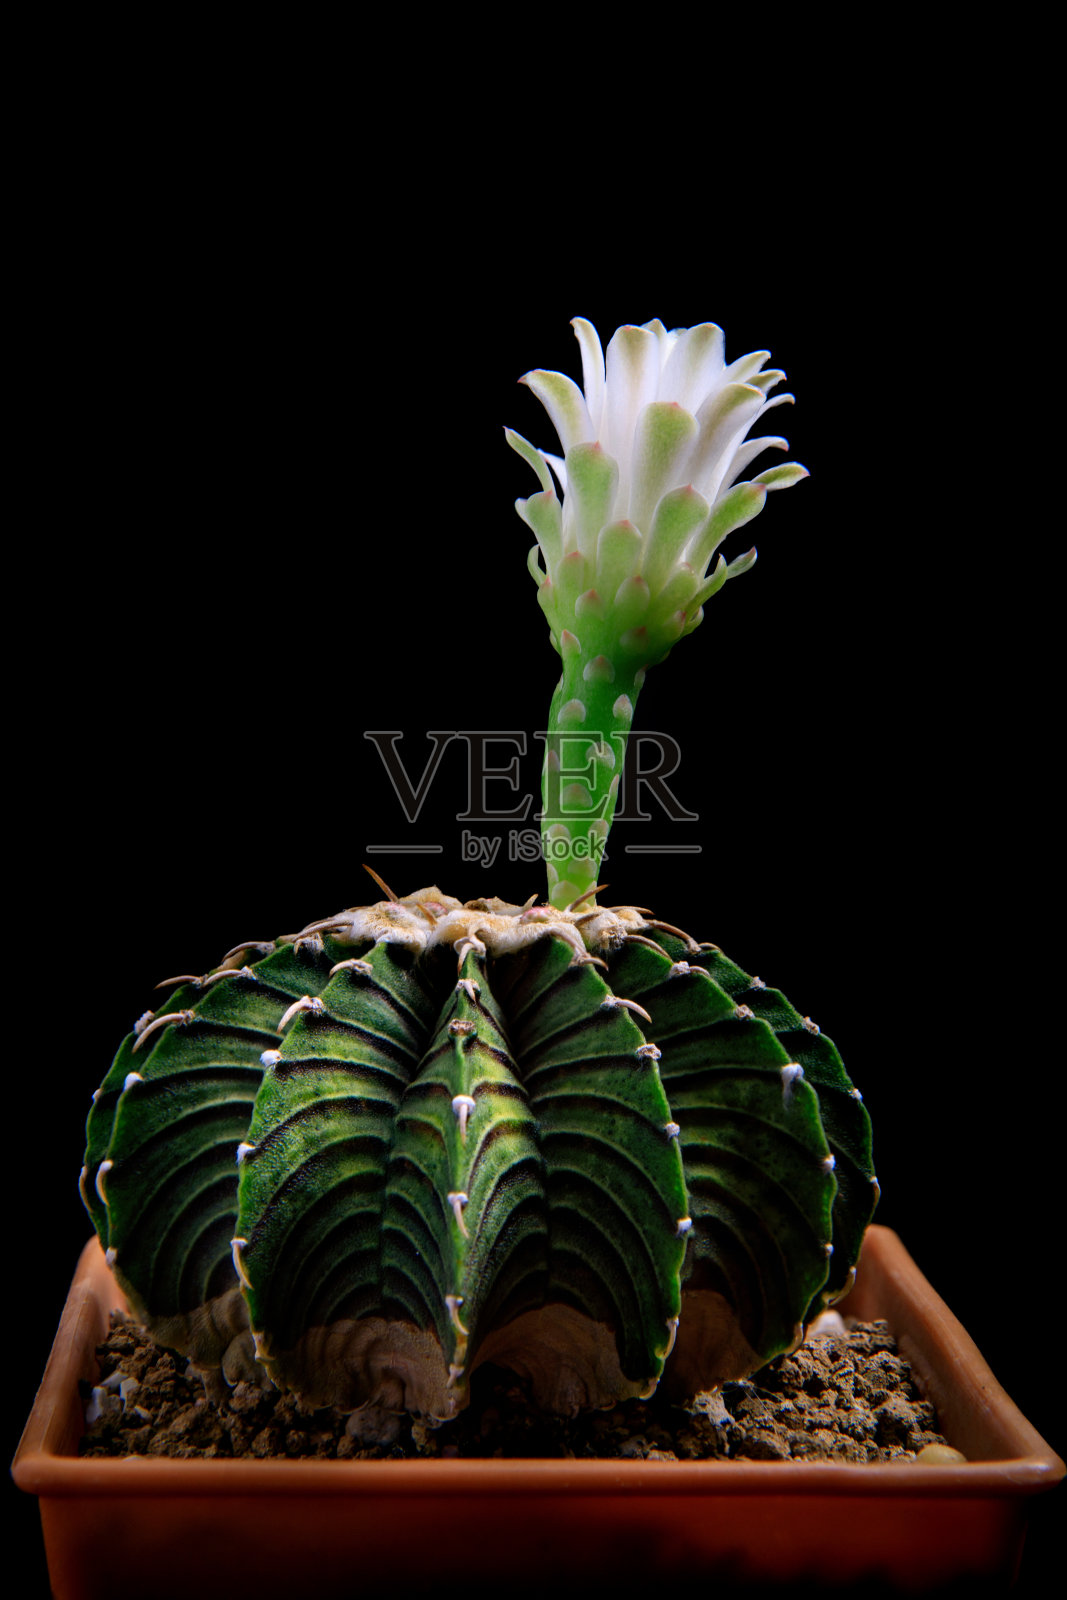 gymnocalcium mihanovichii lb2178仙人掌盆栽照片摄影图片